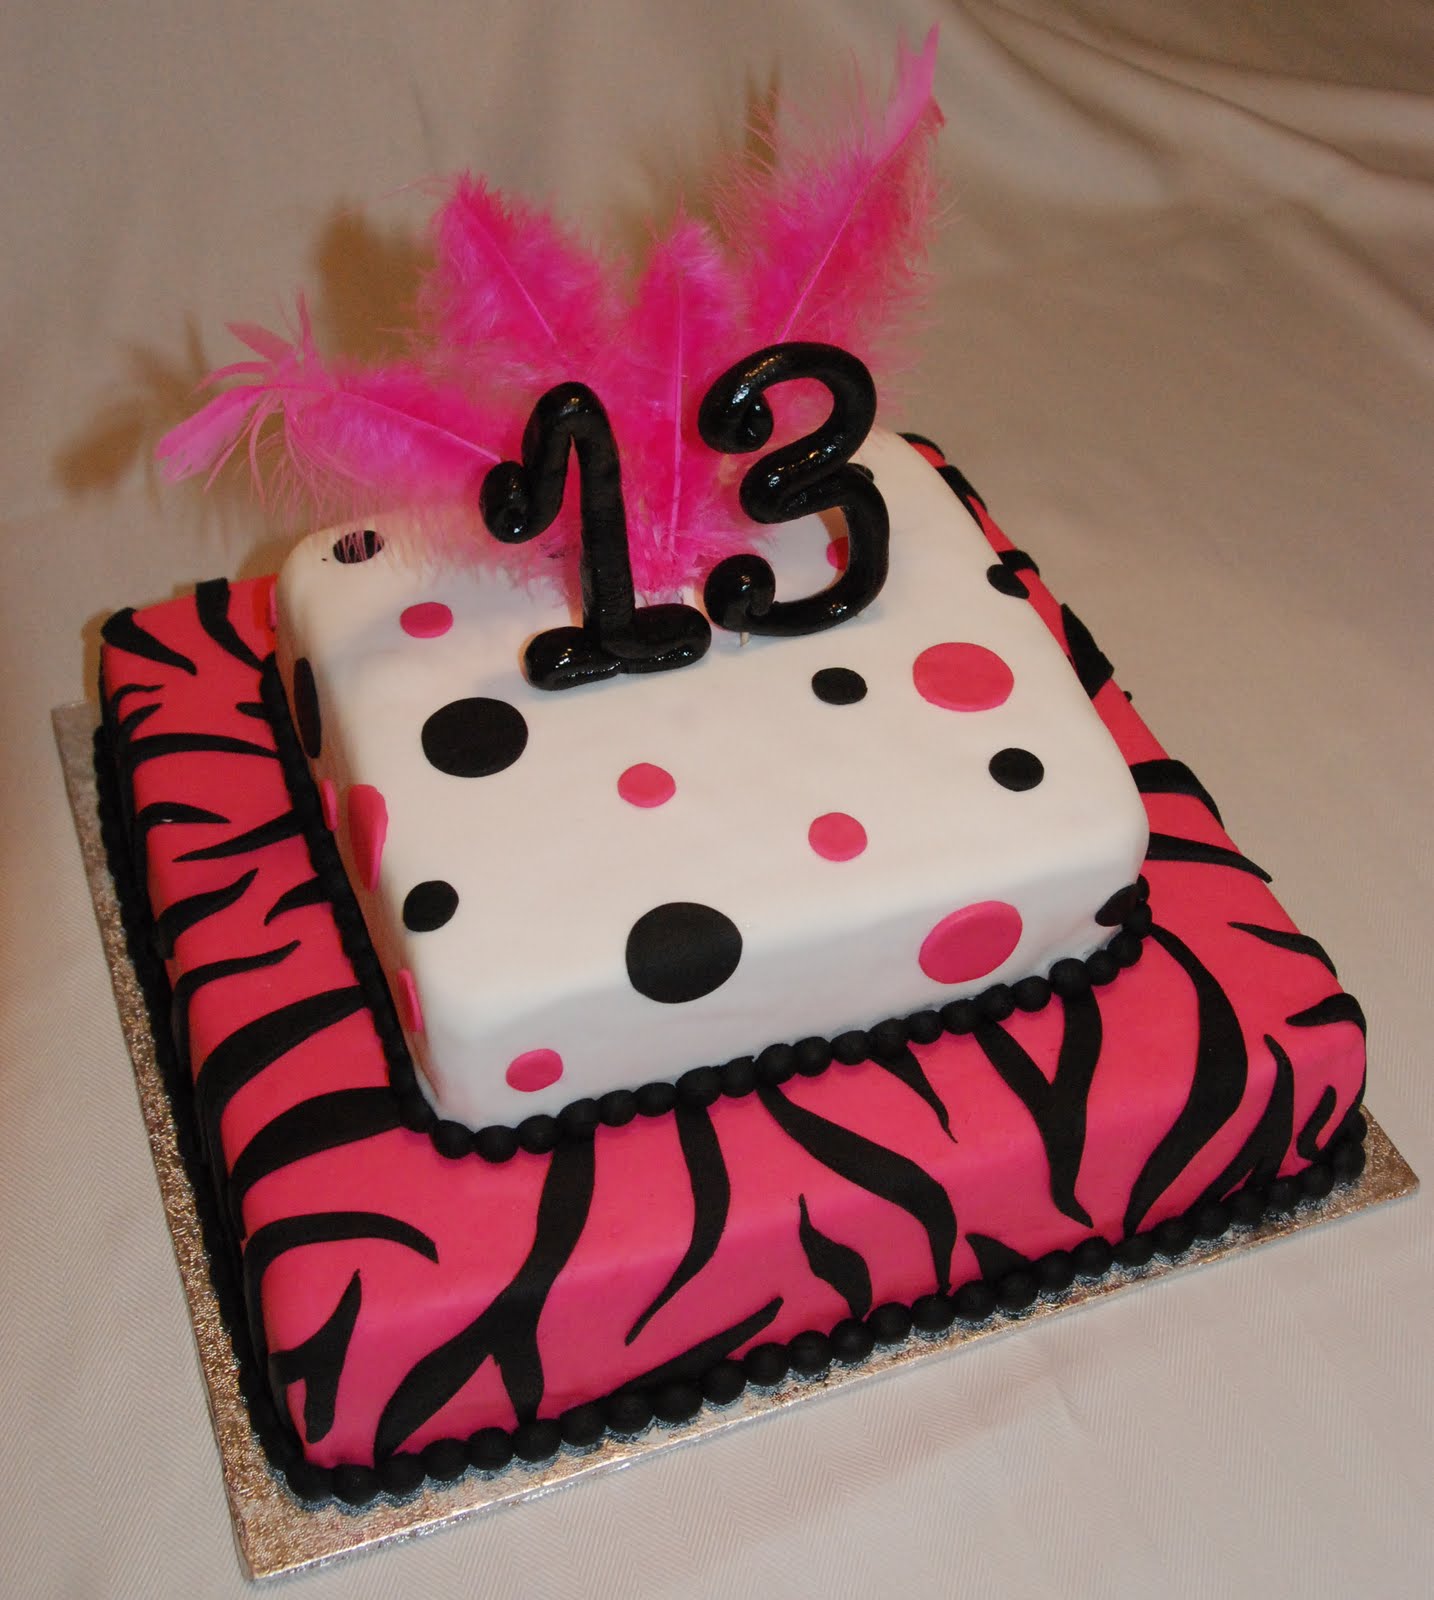 cool cake designs Animal influenced 13th birthday cake! 12 inch Vanilla cake layered 